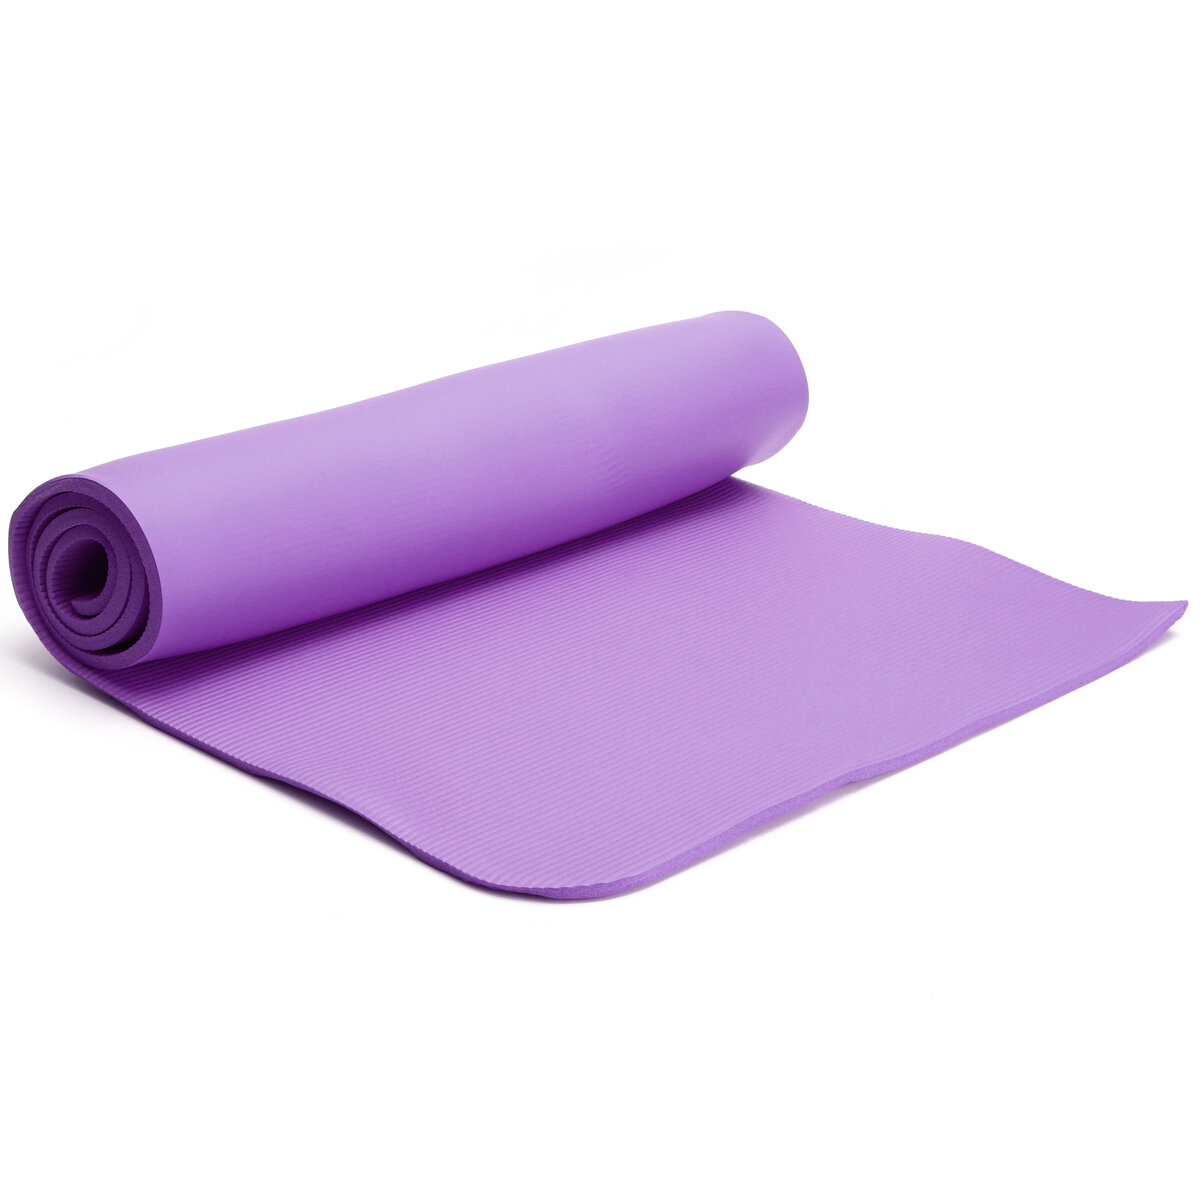 Yoga Exercise Mat Eco Friendly Home Gym Pilates Floor Fitness Non Slip 1cm Thick Yoga Mat